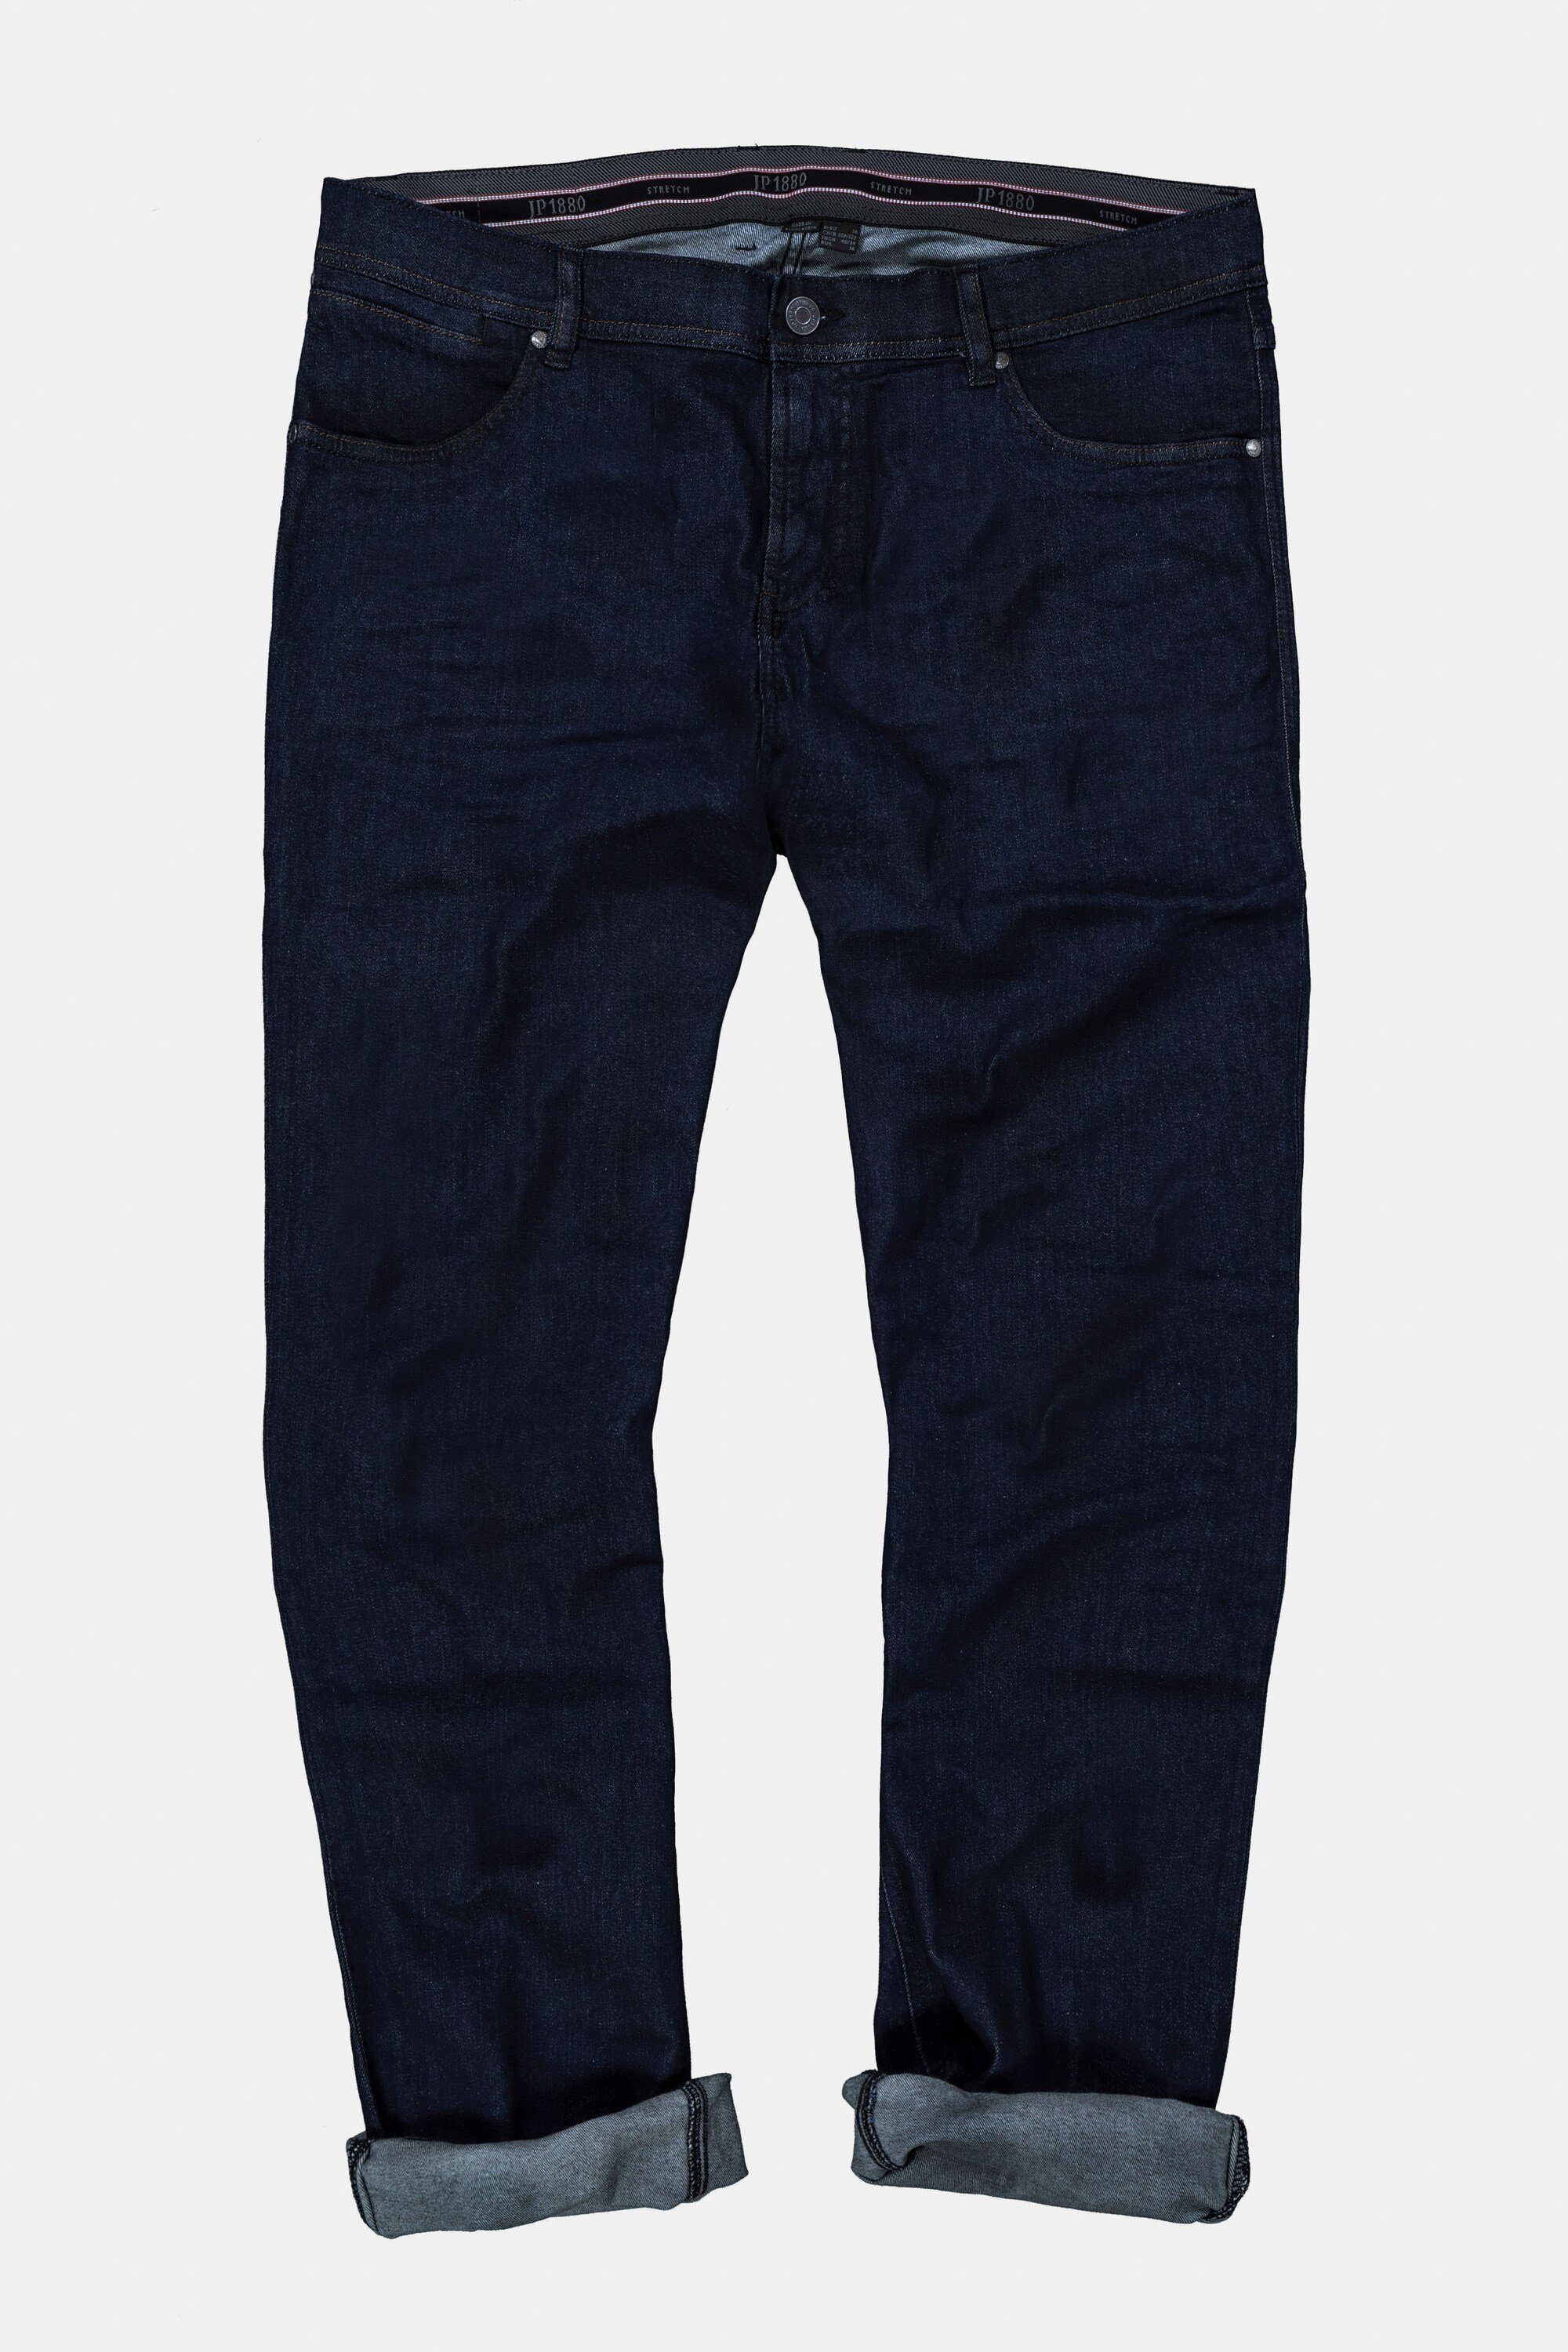 JP1880 Cargohose Jeans Bauchfit dark Gr. denim Denim bis blue 70/35